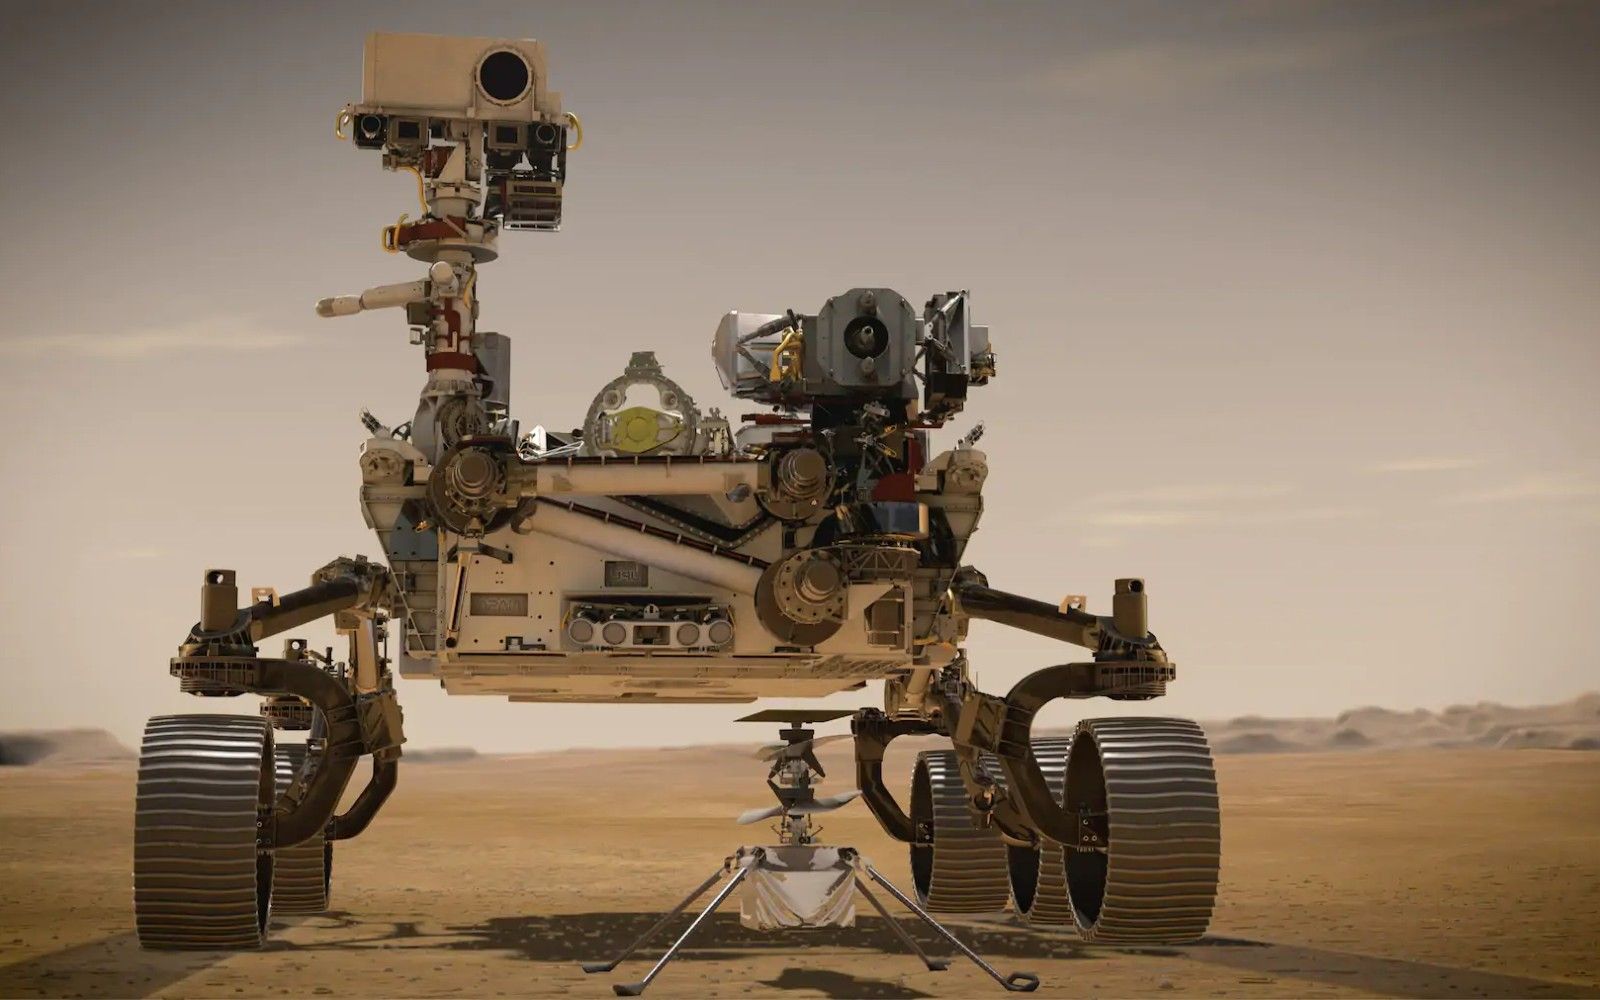 Perseverance rover lands safely on Marsyahoo.com